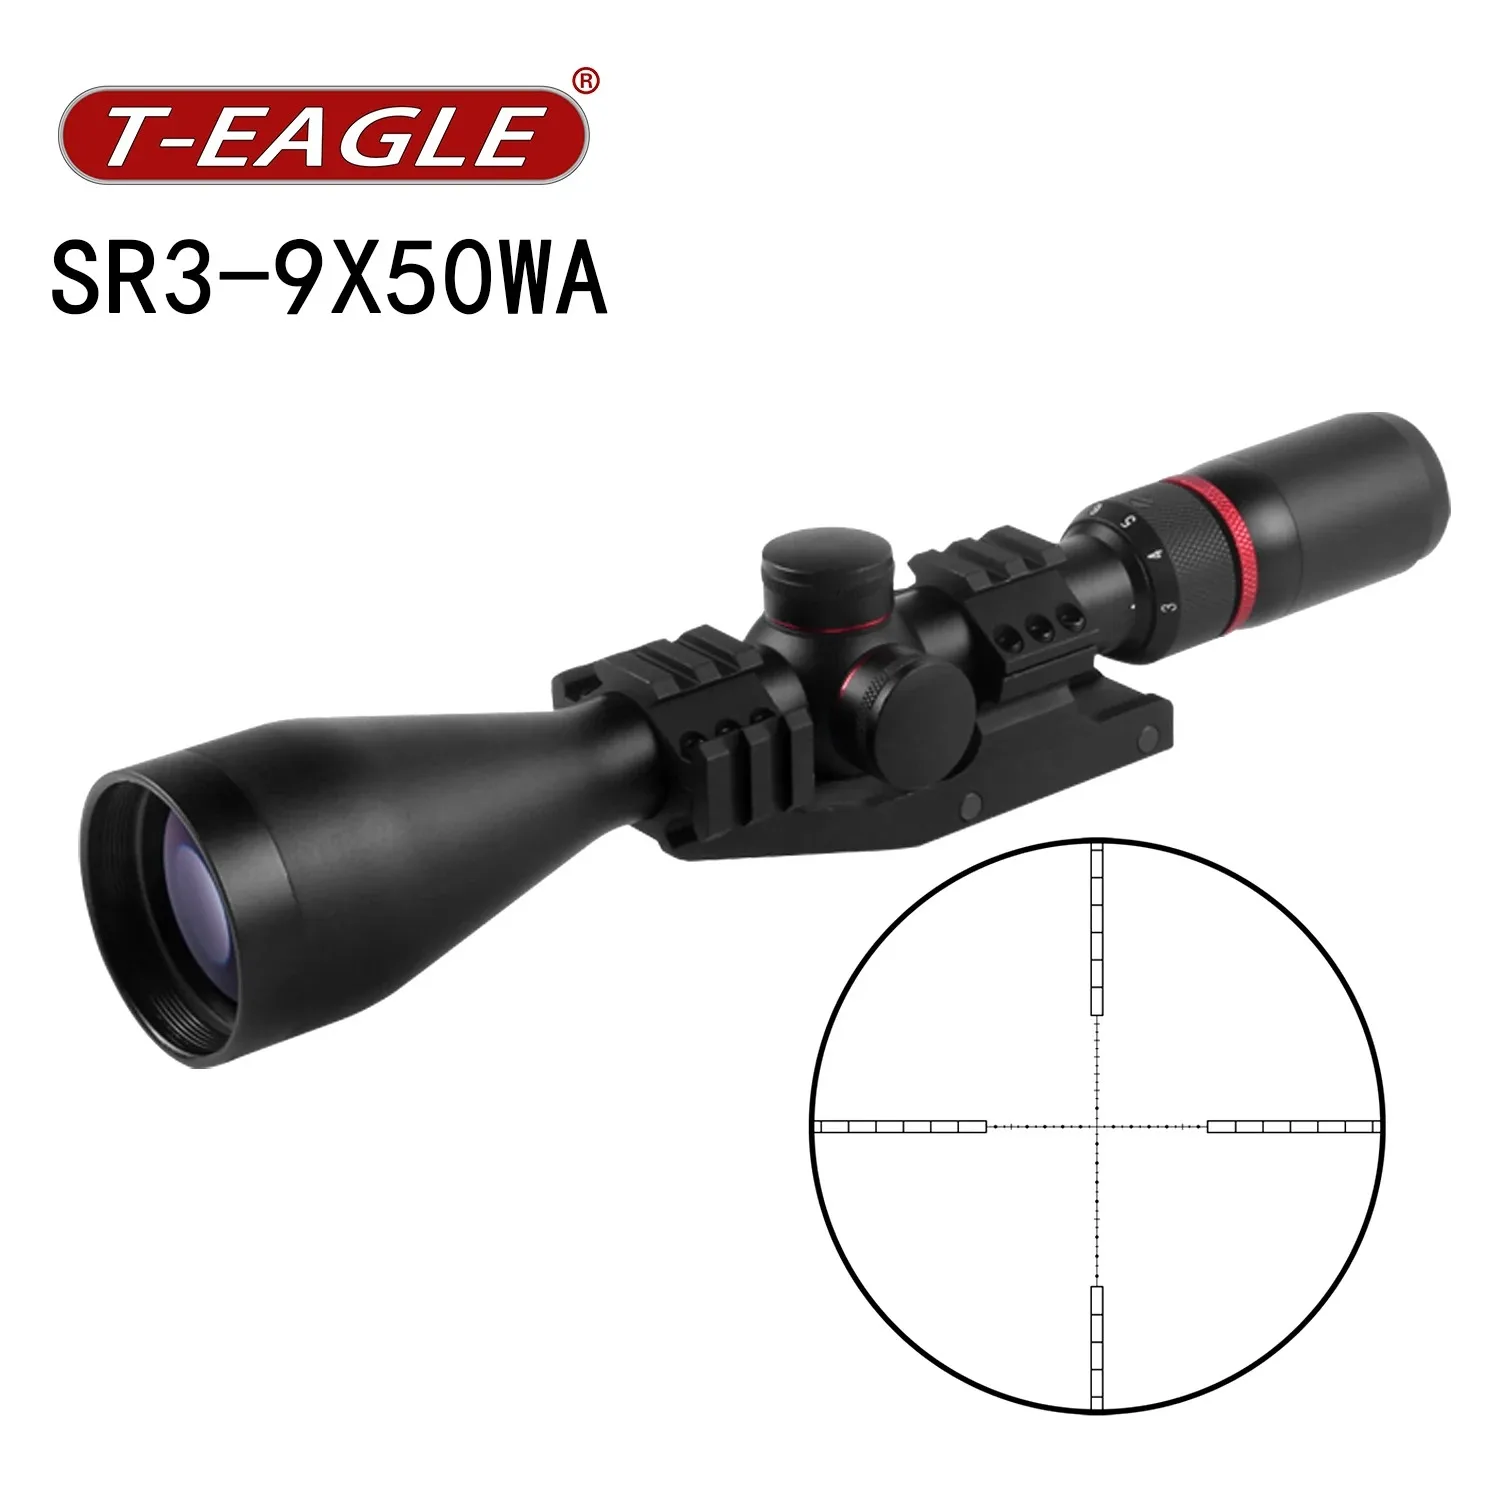 

T-EAGLE SR 3-9X50WA HK Thin Border Air Rifle Optics Scope Optical Sight Compact Rifle Scope For Hunting Scopes With Rail Mounts